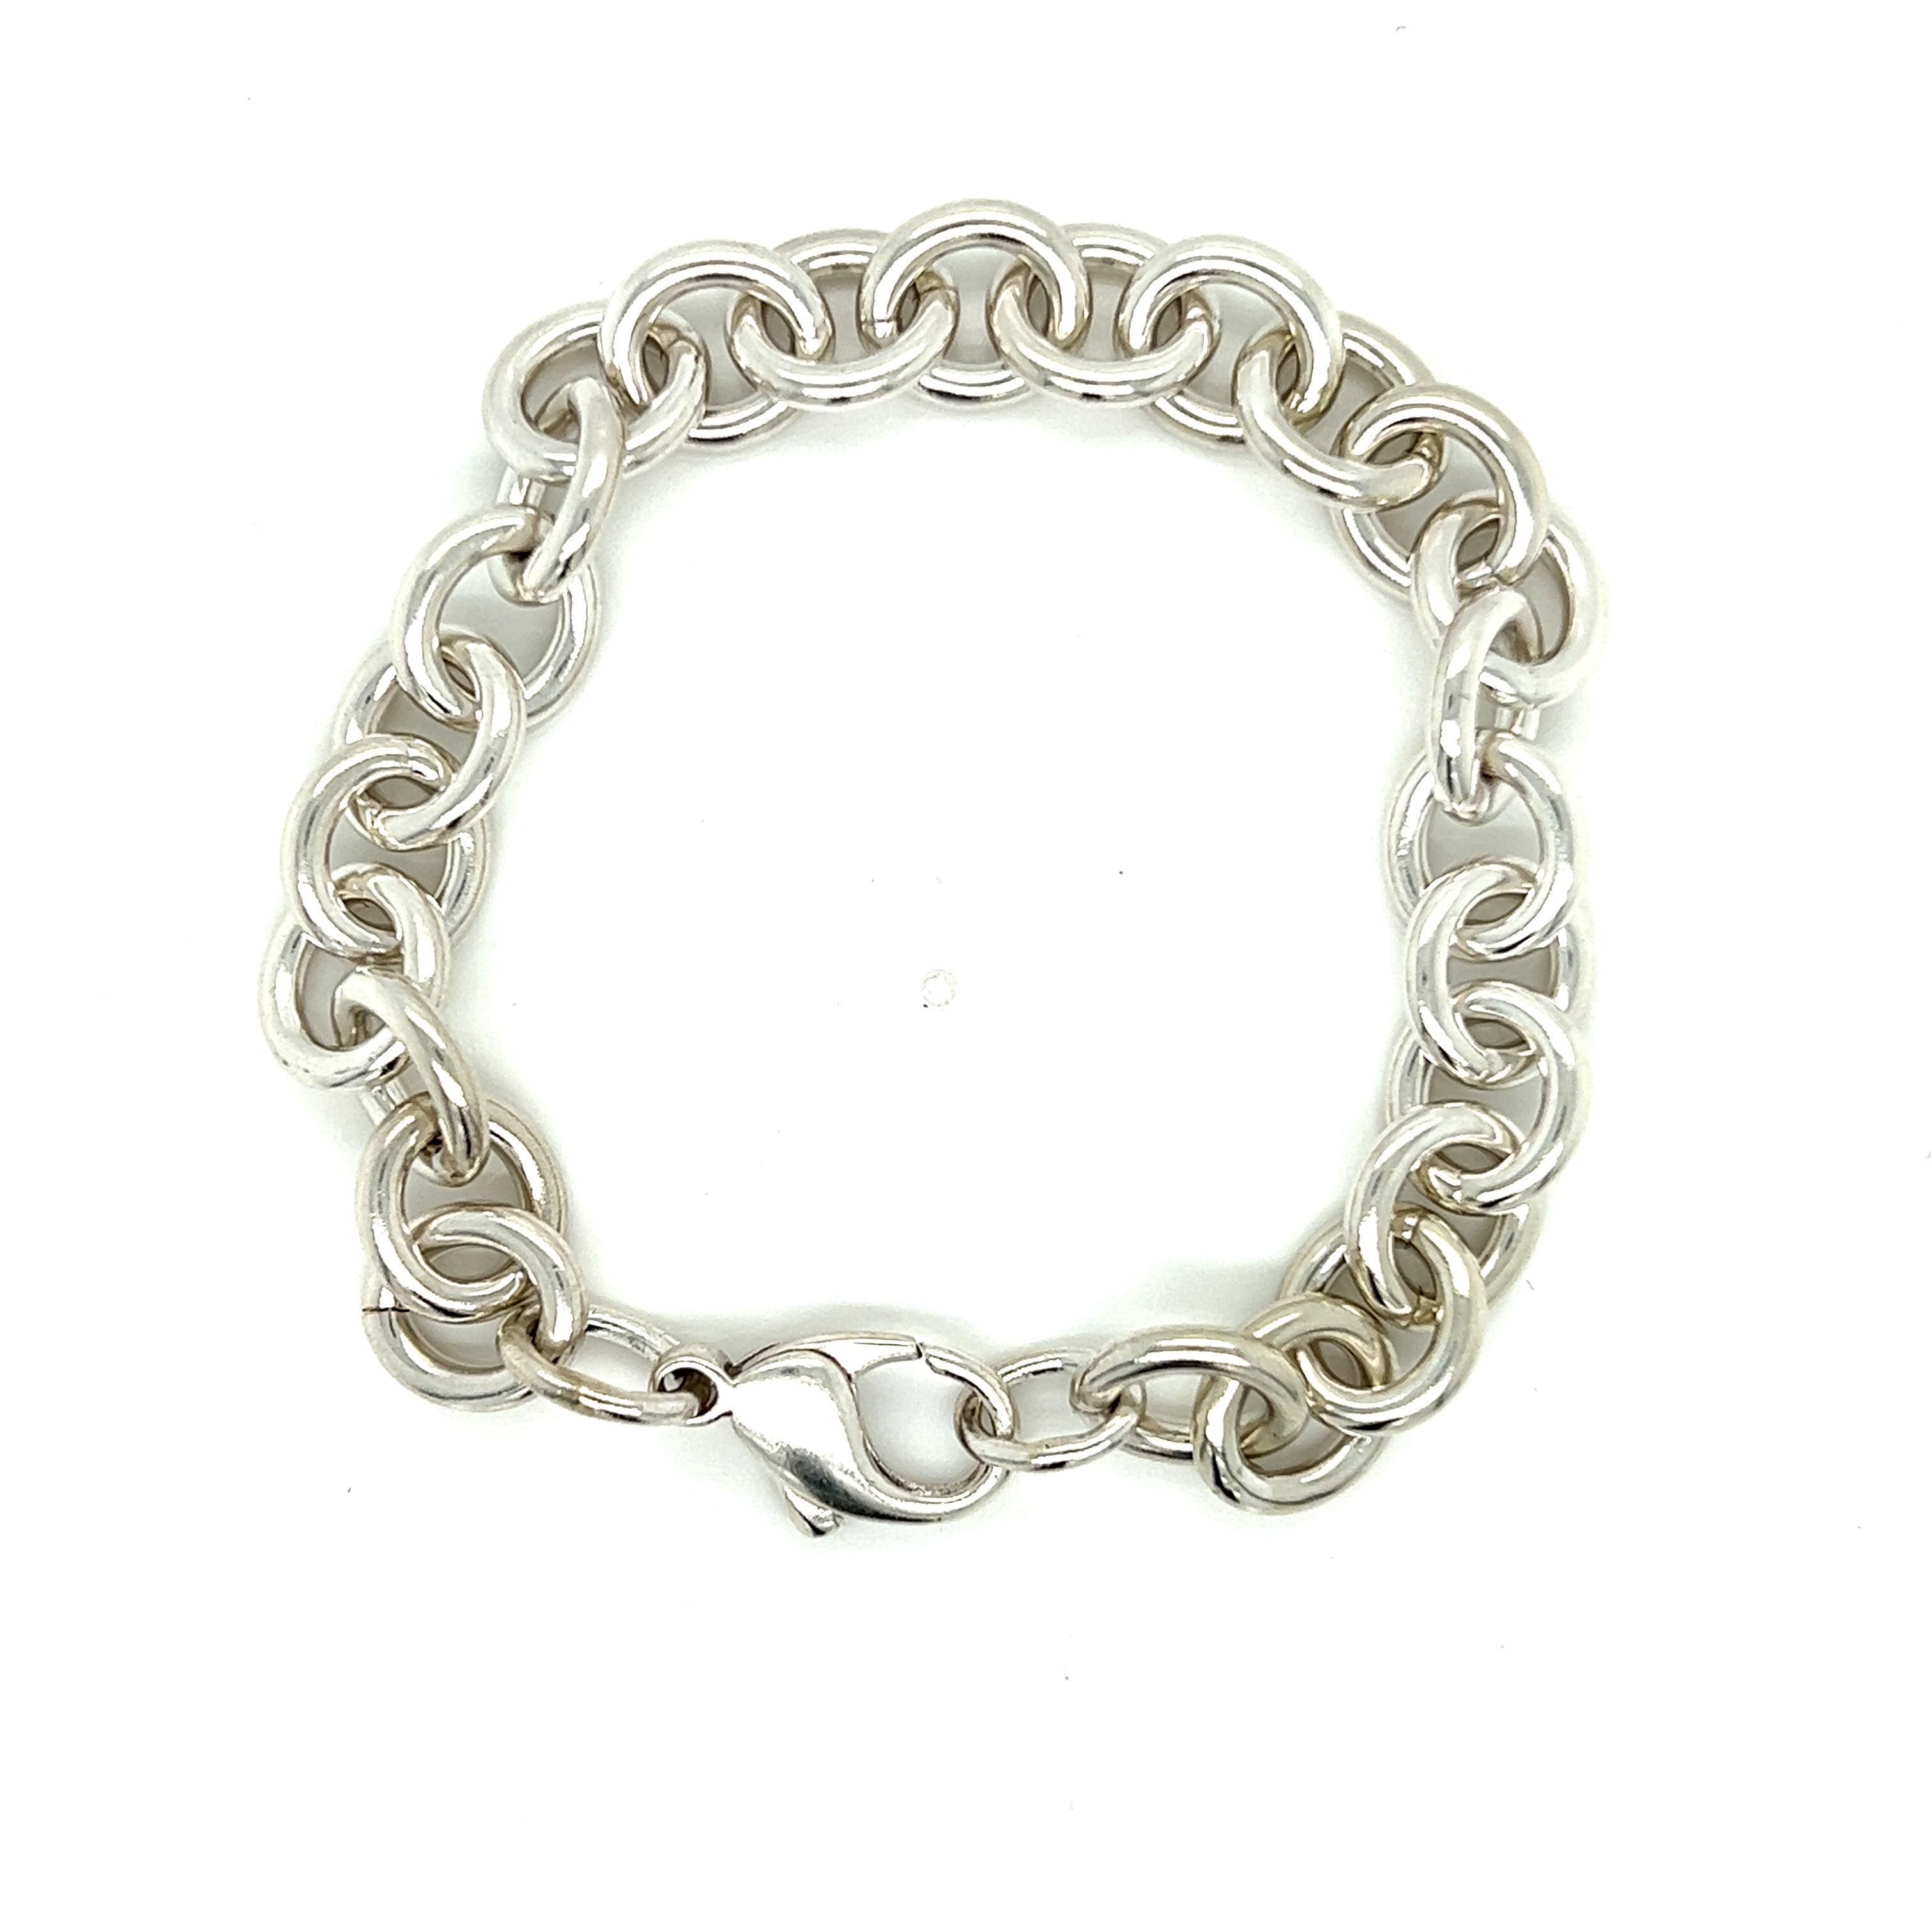 Sterling Silver Cable Bracelet